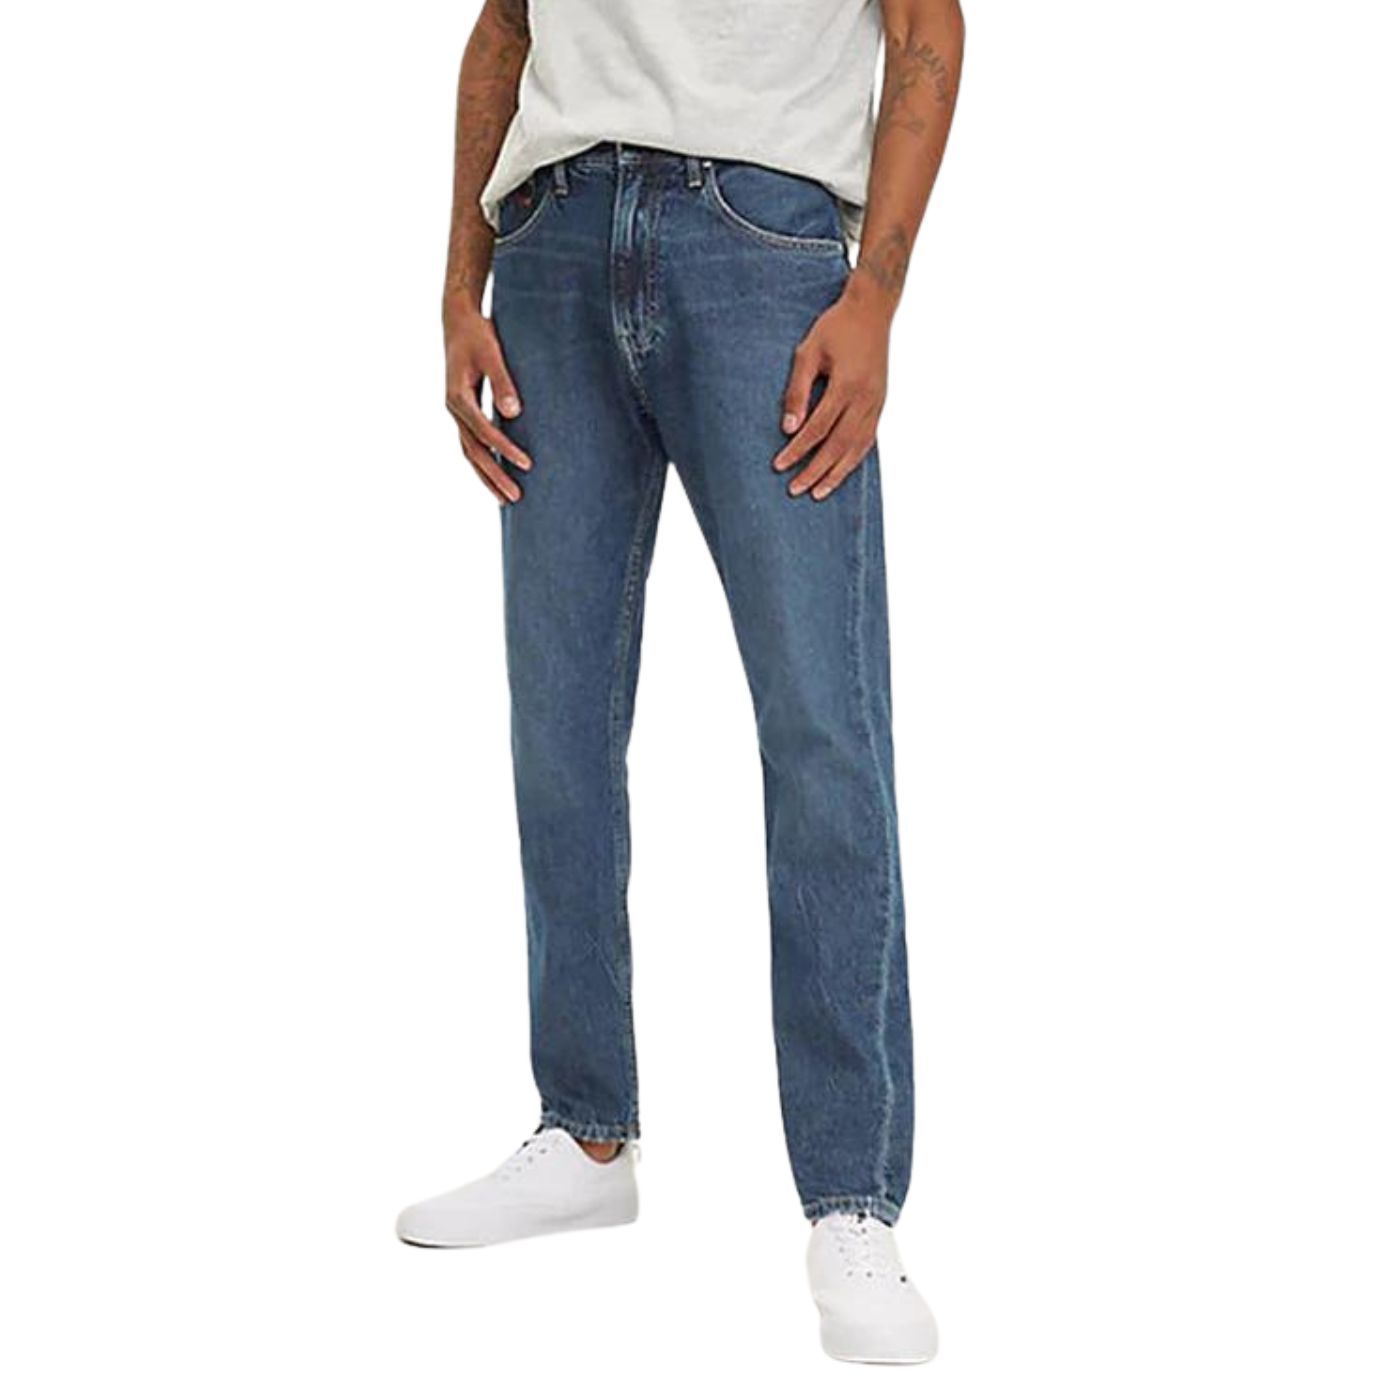 Tommy Hilfiger Modern Tapered TJ 1988 Jeans